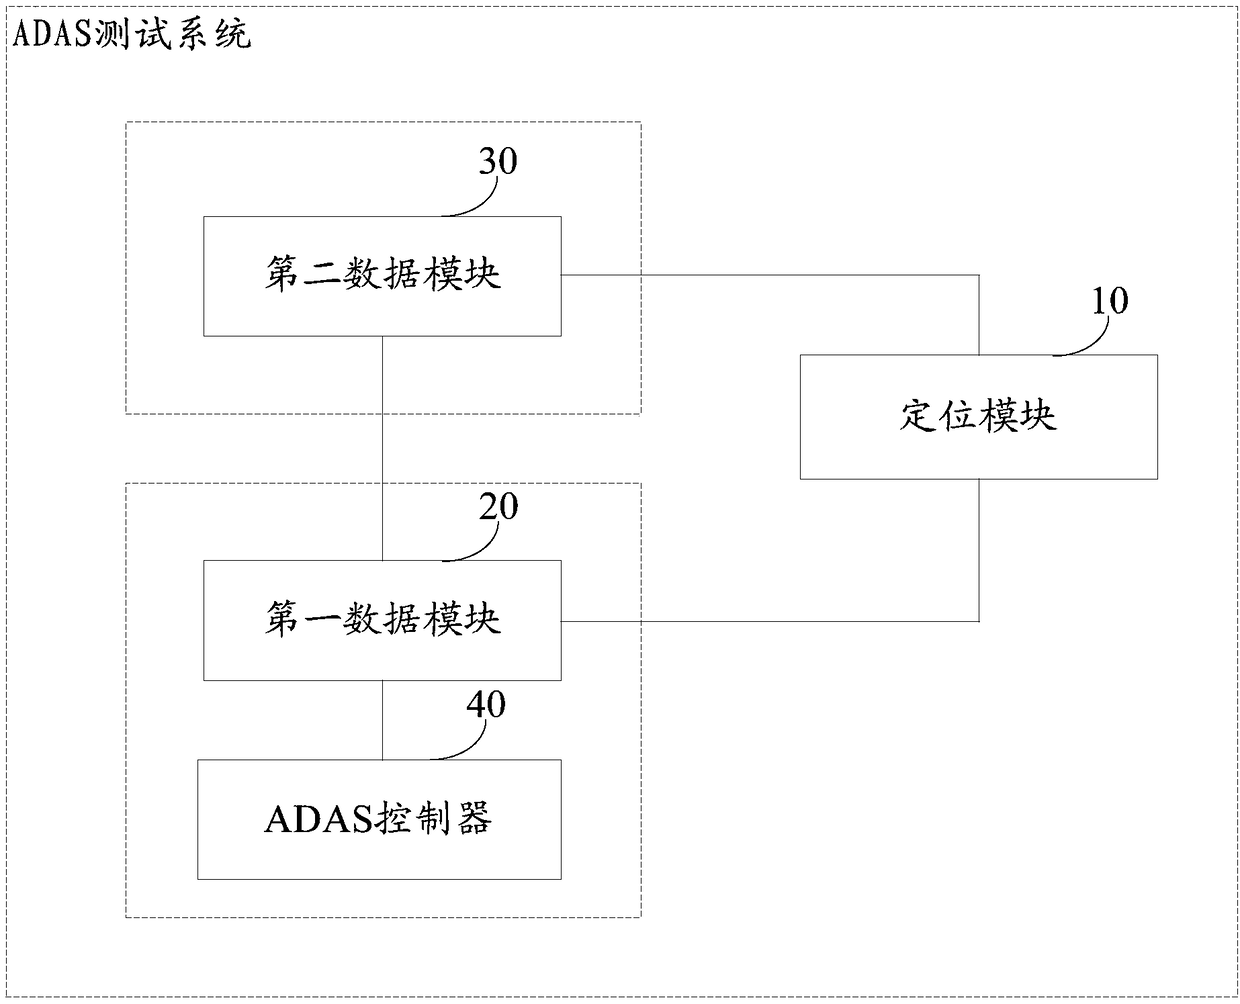 ADAS test system and test method